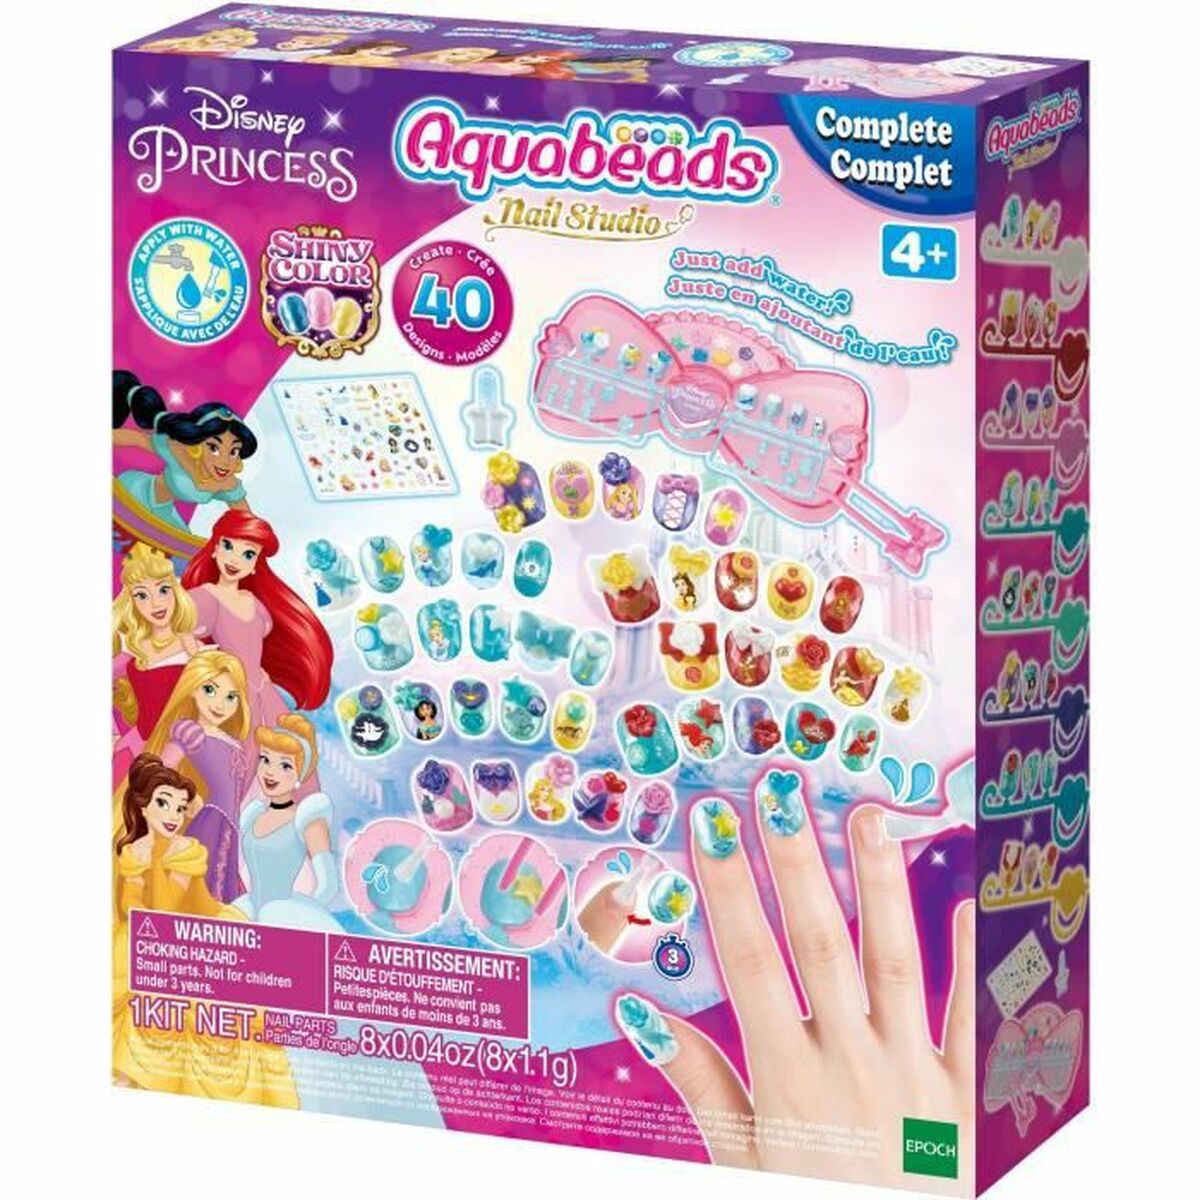 Osta tuote Manikyyrisetti Aquabeads The Disney Princesses Manicure Box verkkokaupastamme Korhone: Urheilu & Vapaa-aika 20% alennuksella koodilla VIIKONLOPPU